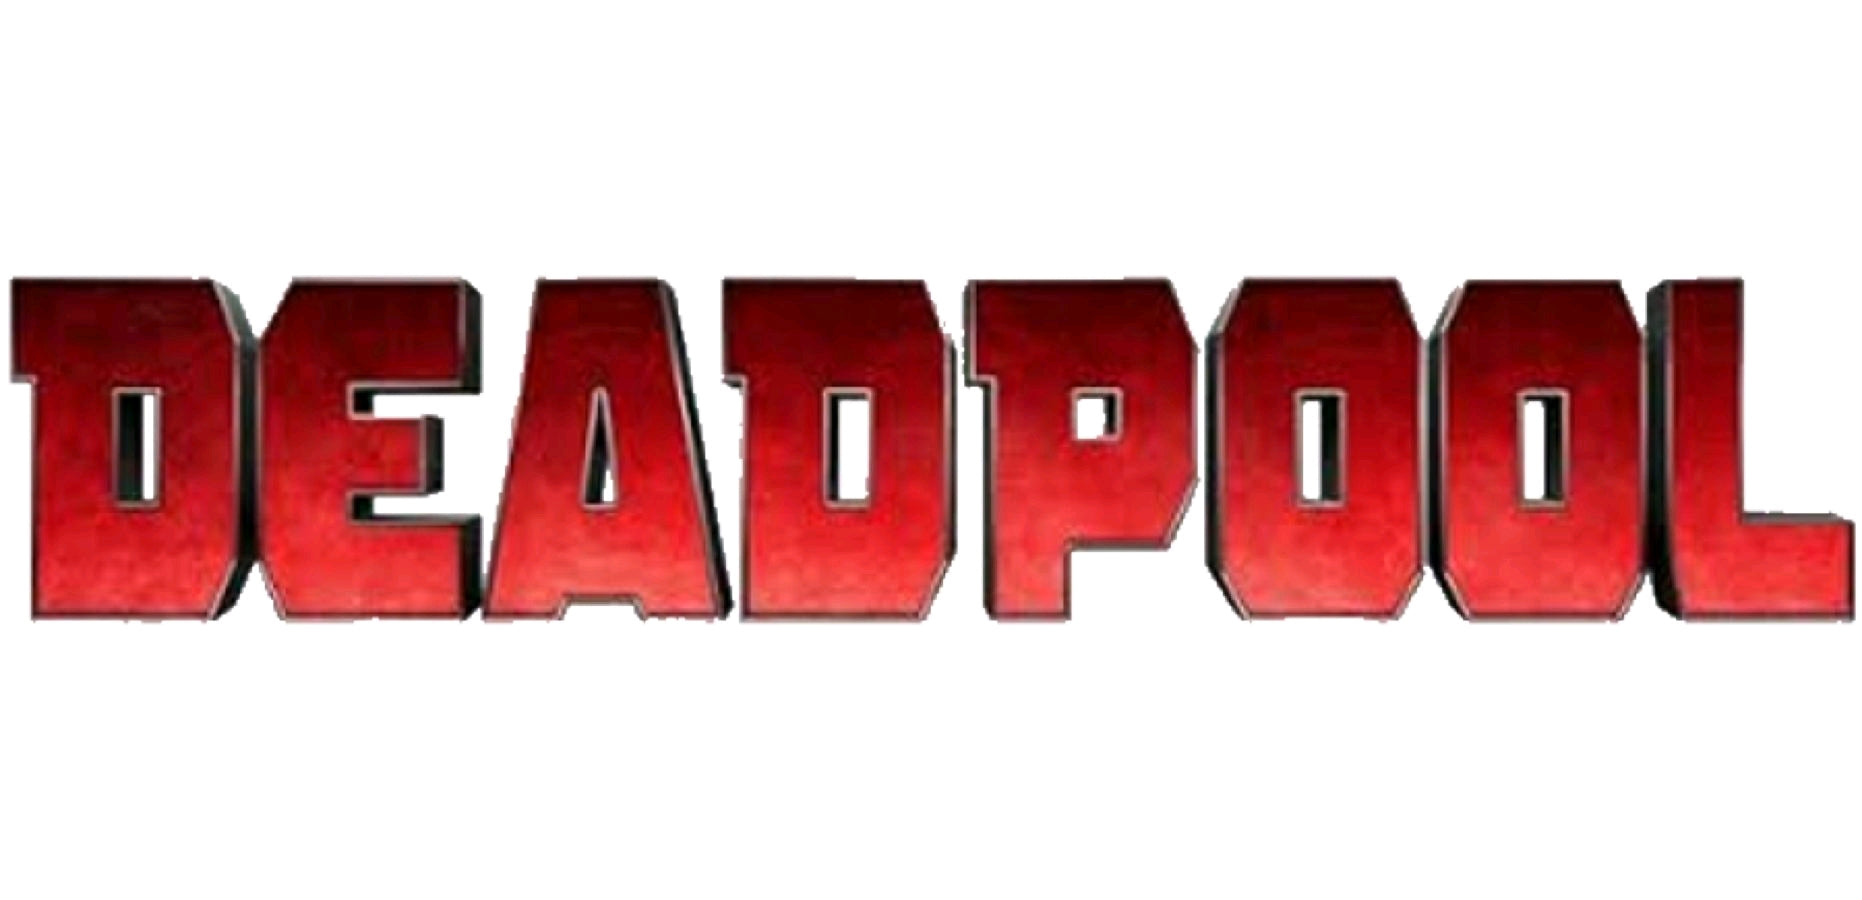 Deadpool - Taco Samurai 4" Pop! Enamel Pin